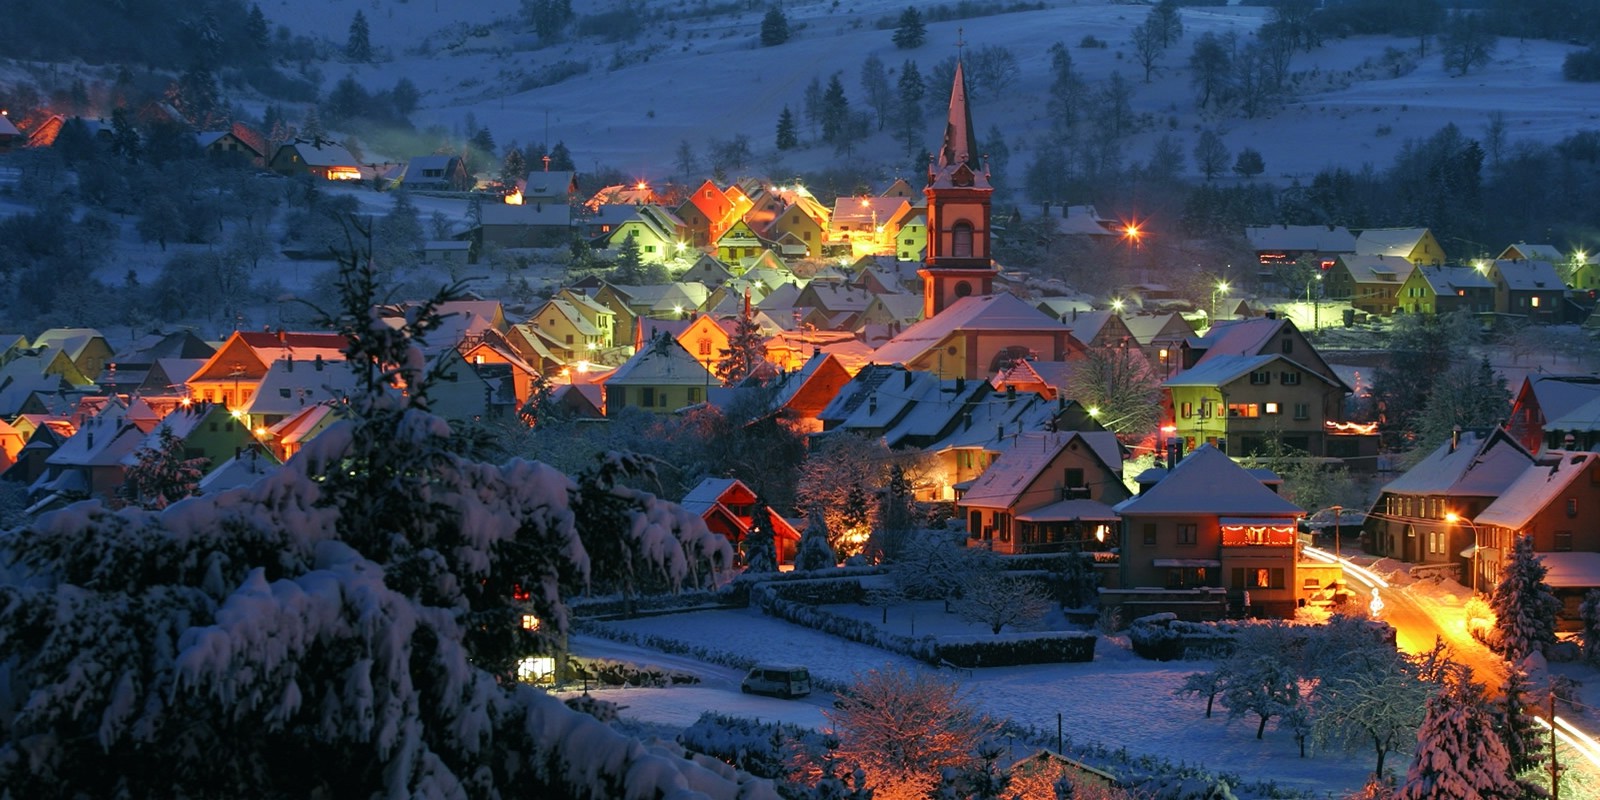 landscape, Nature, Village, Winter, Snow, Lights, Street Light, House